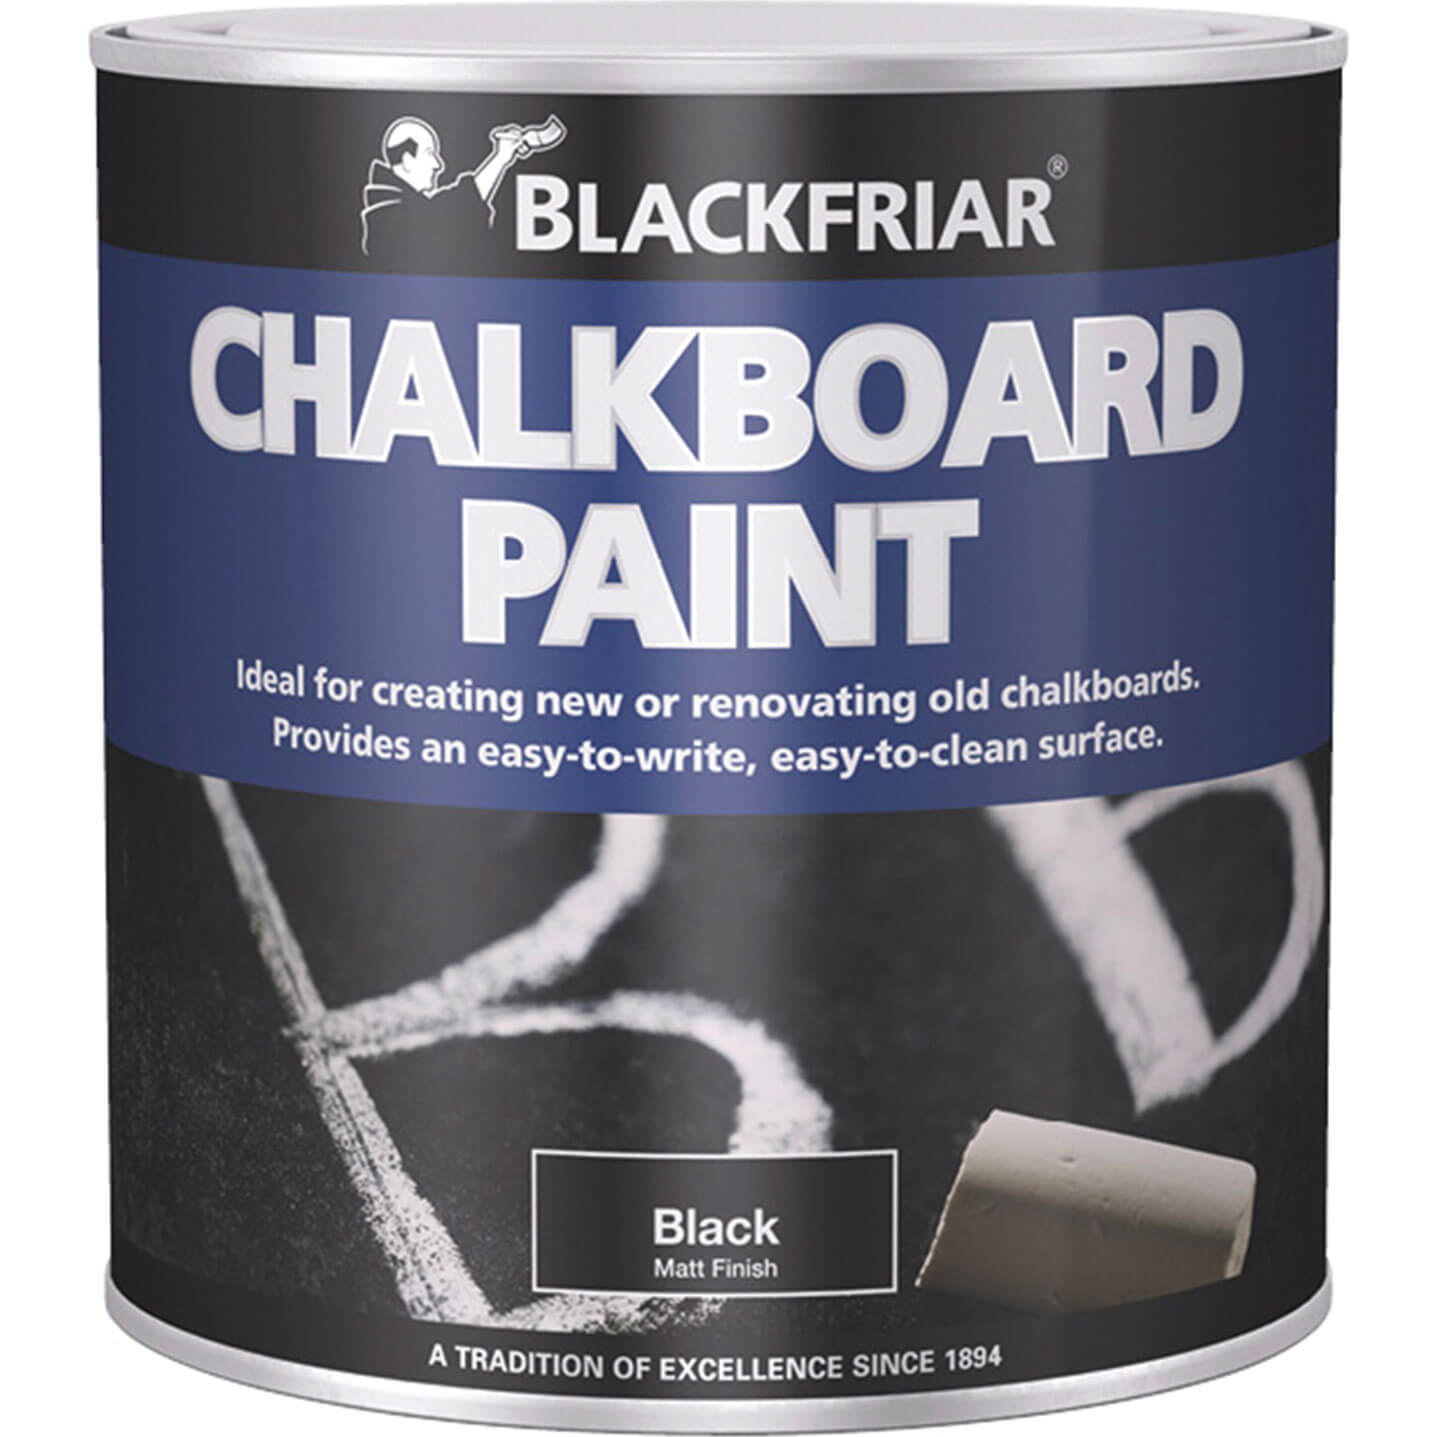 Photos - Varnish Blackfriar Chalkboard Paint for Renovating or Creating Chalkboards Black 2